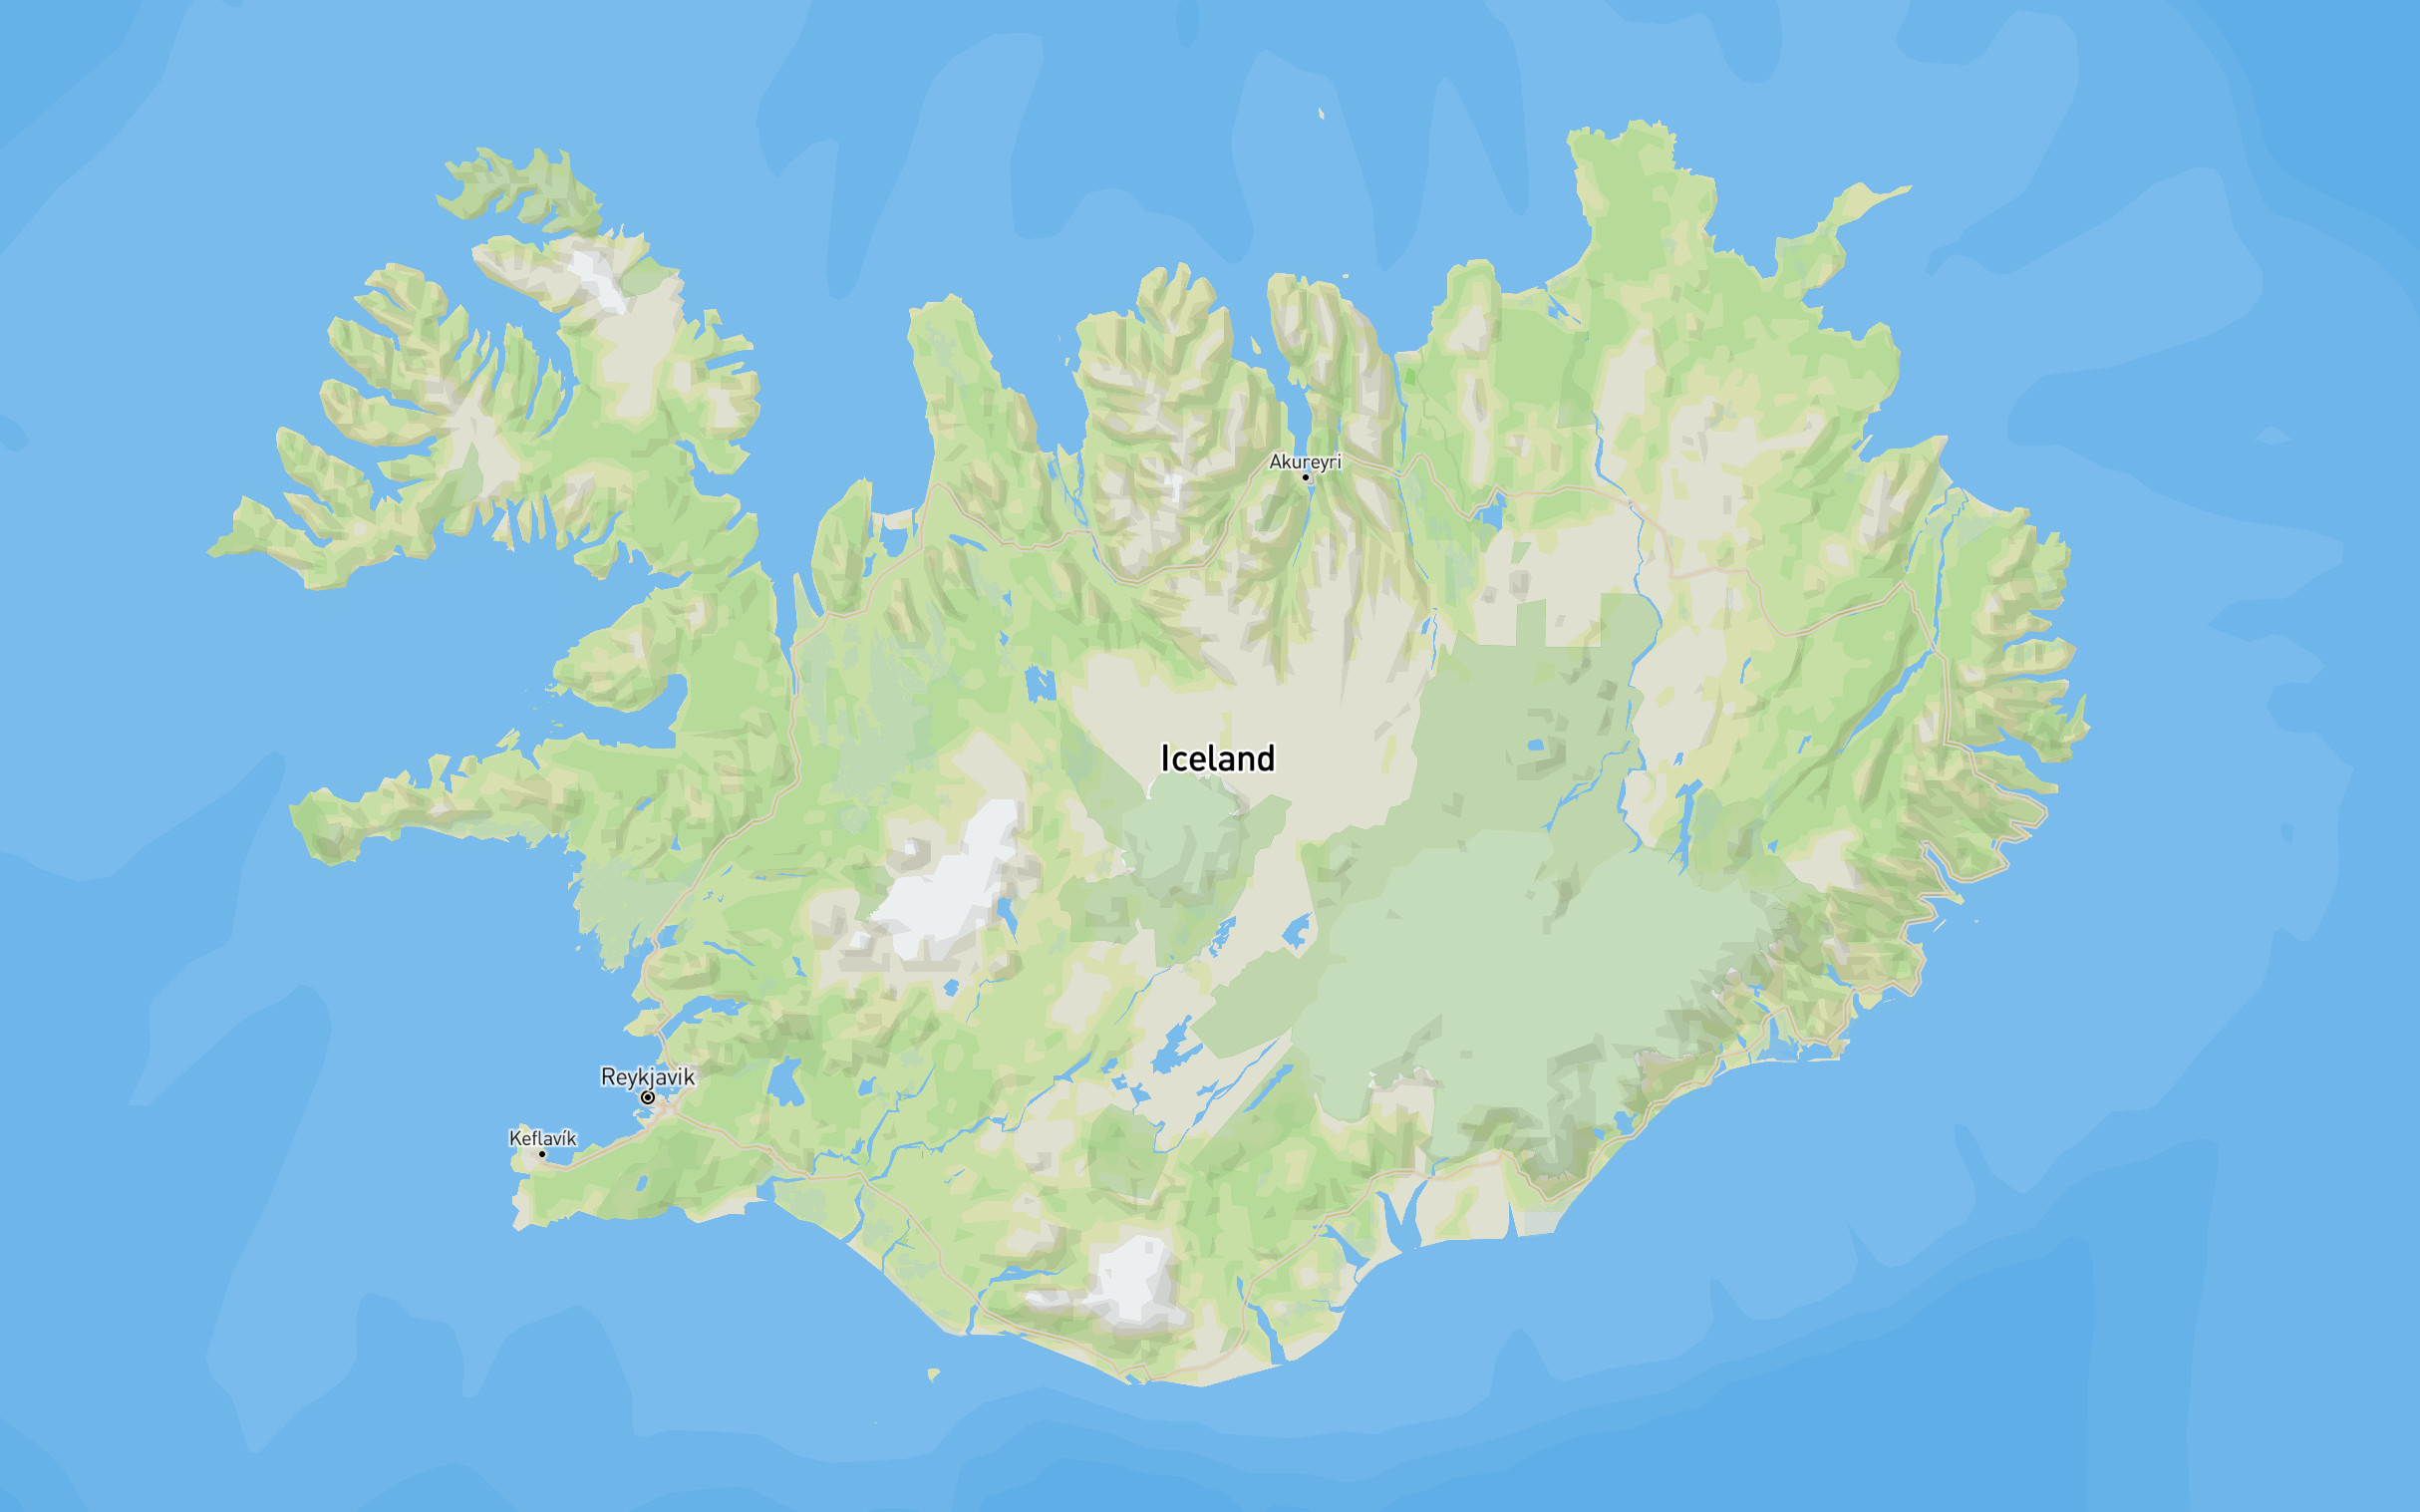 Icelandic lifting stone locations lead image.